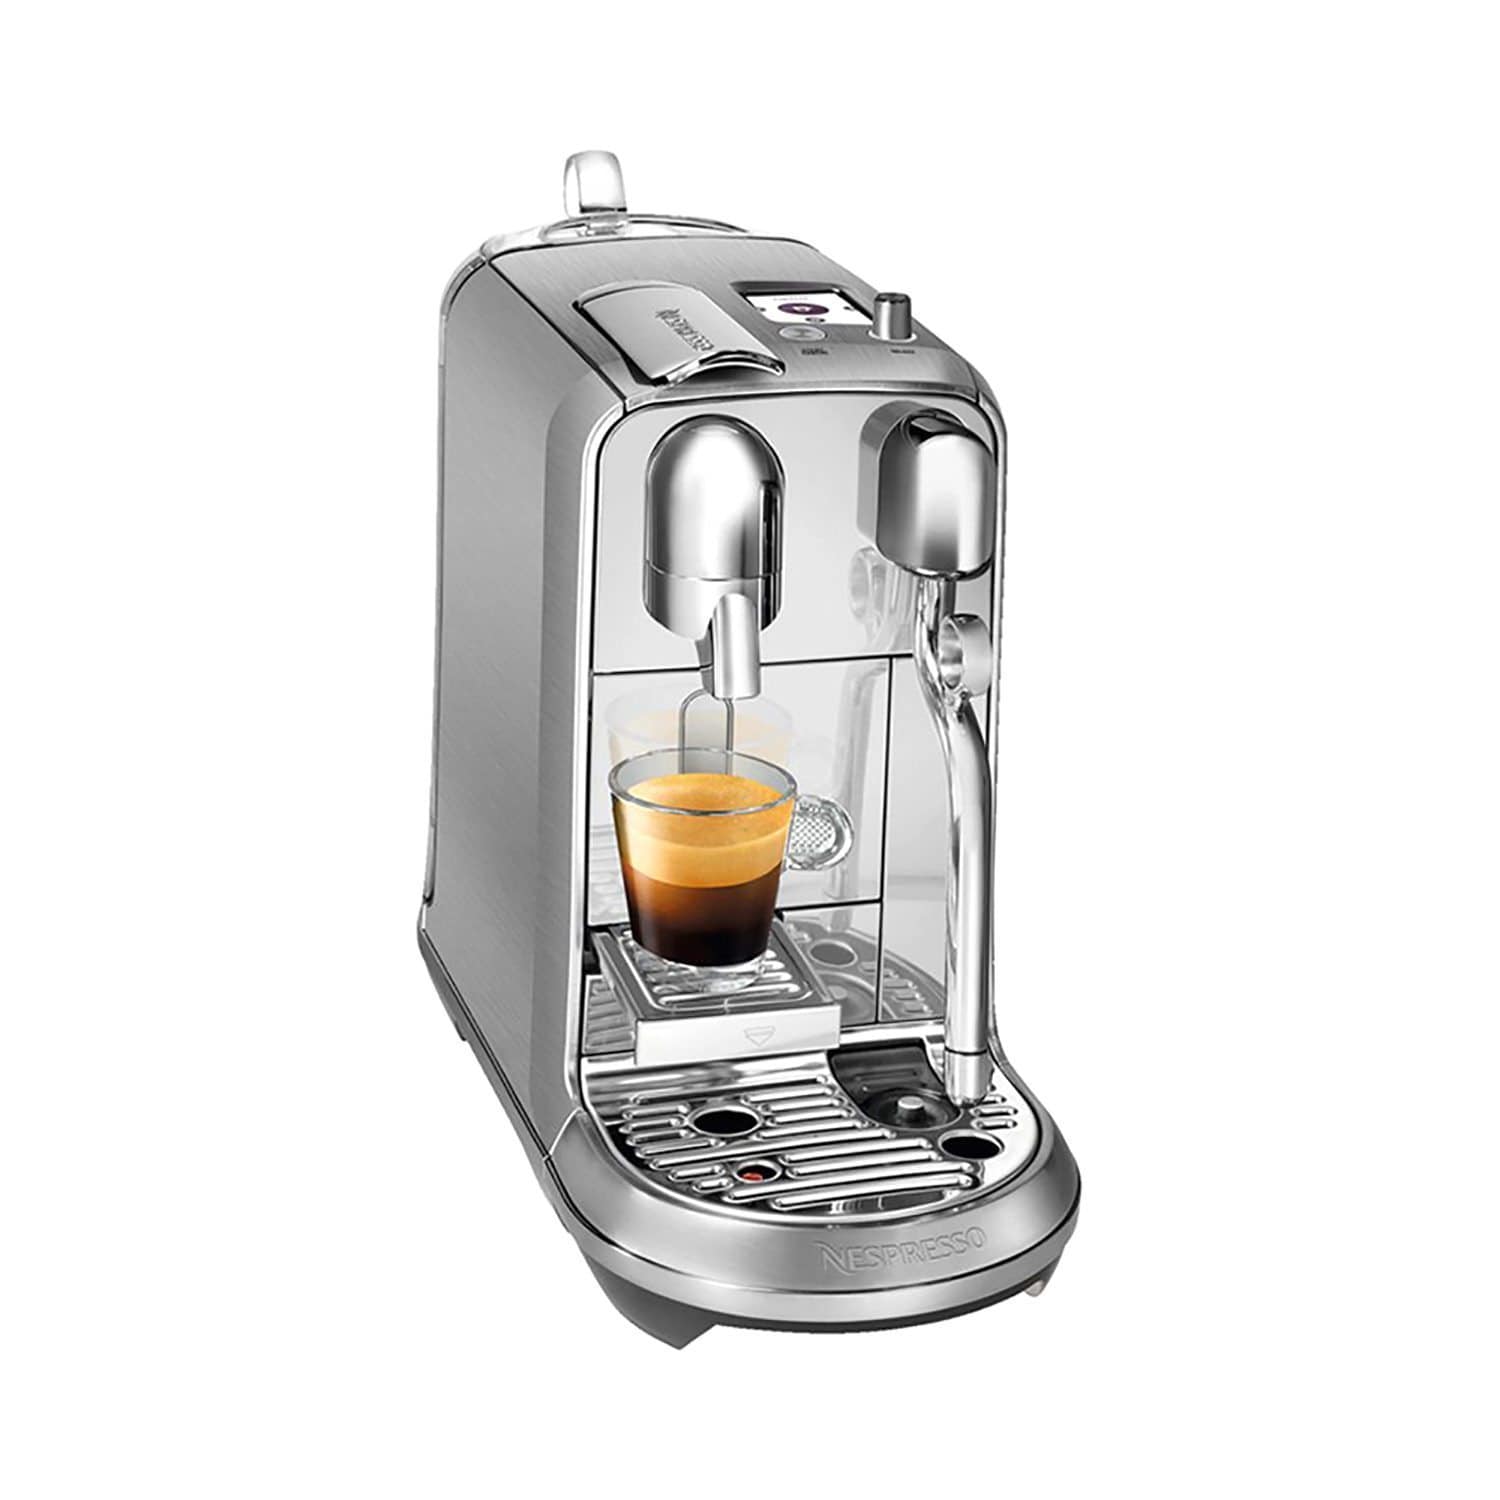 Nespresso ماكينة صنع القهوة كرياتيستا بلس - فضي - J520-ME-ME-NE - جاشنمال هوم